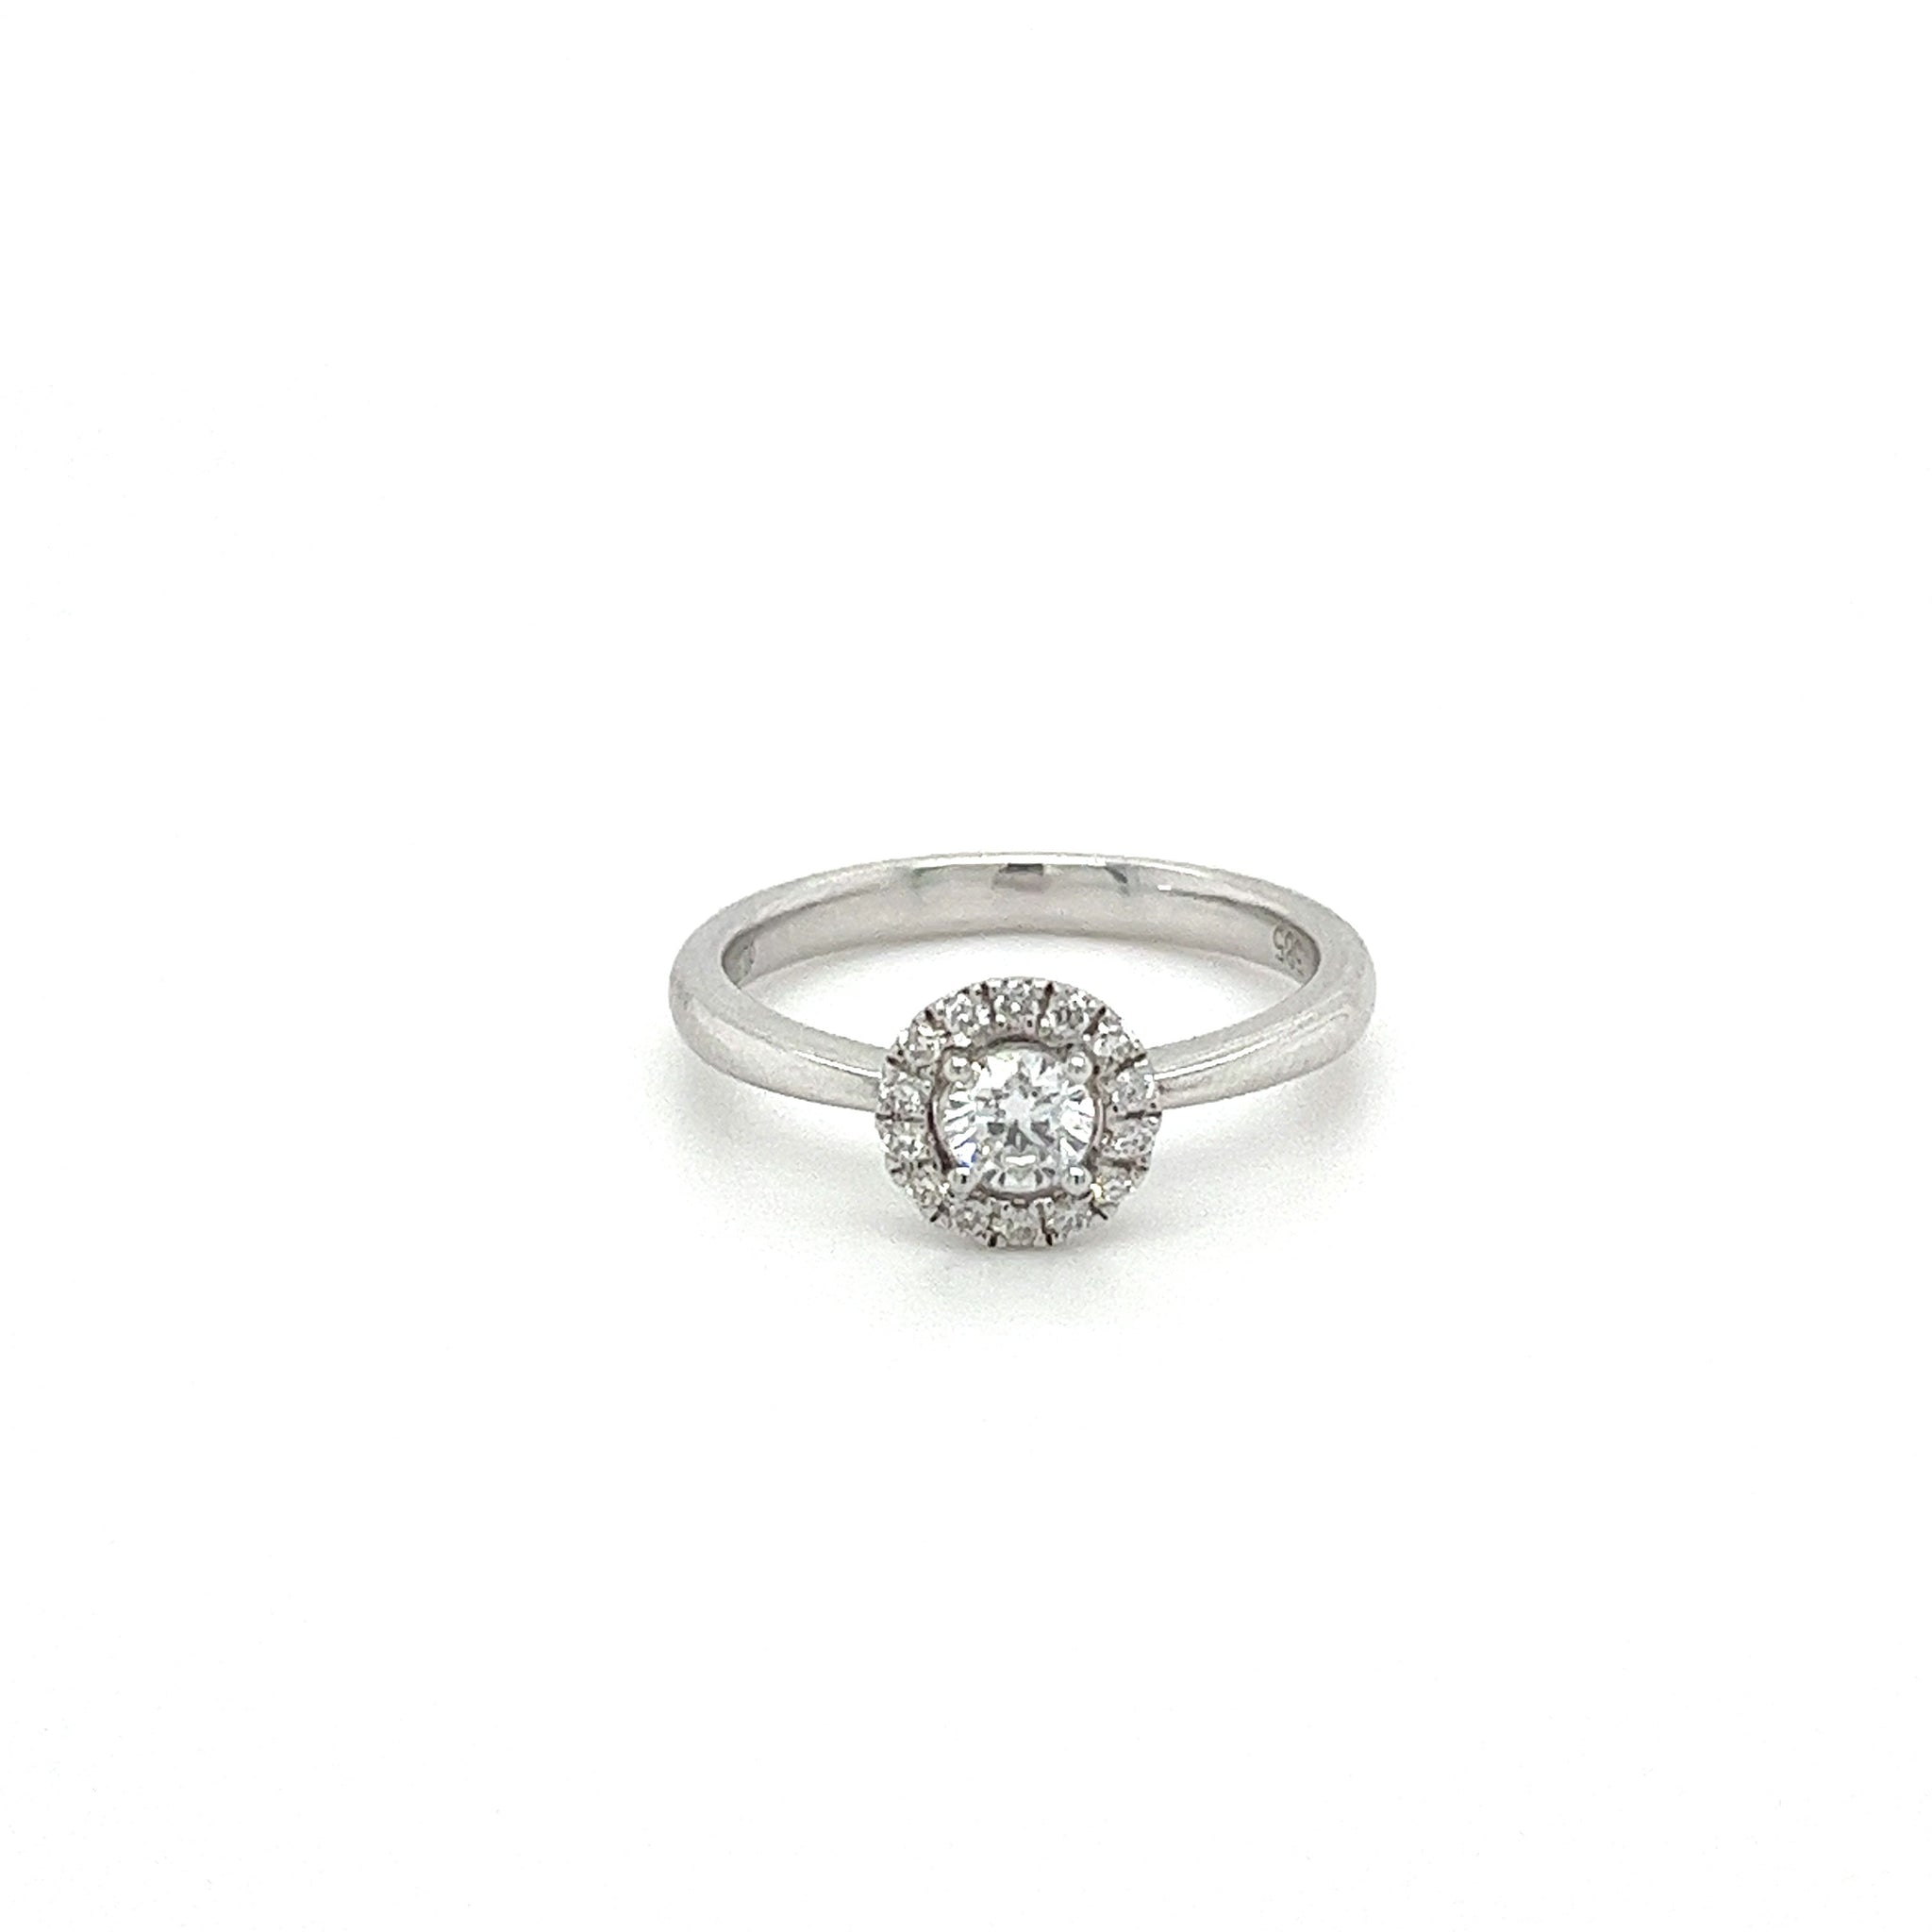 Natural 0.22 Carat Round Cut Diamond Ring in 14K White Gold & Diamond Halo